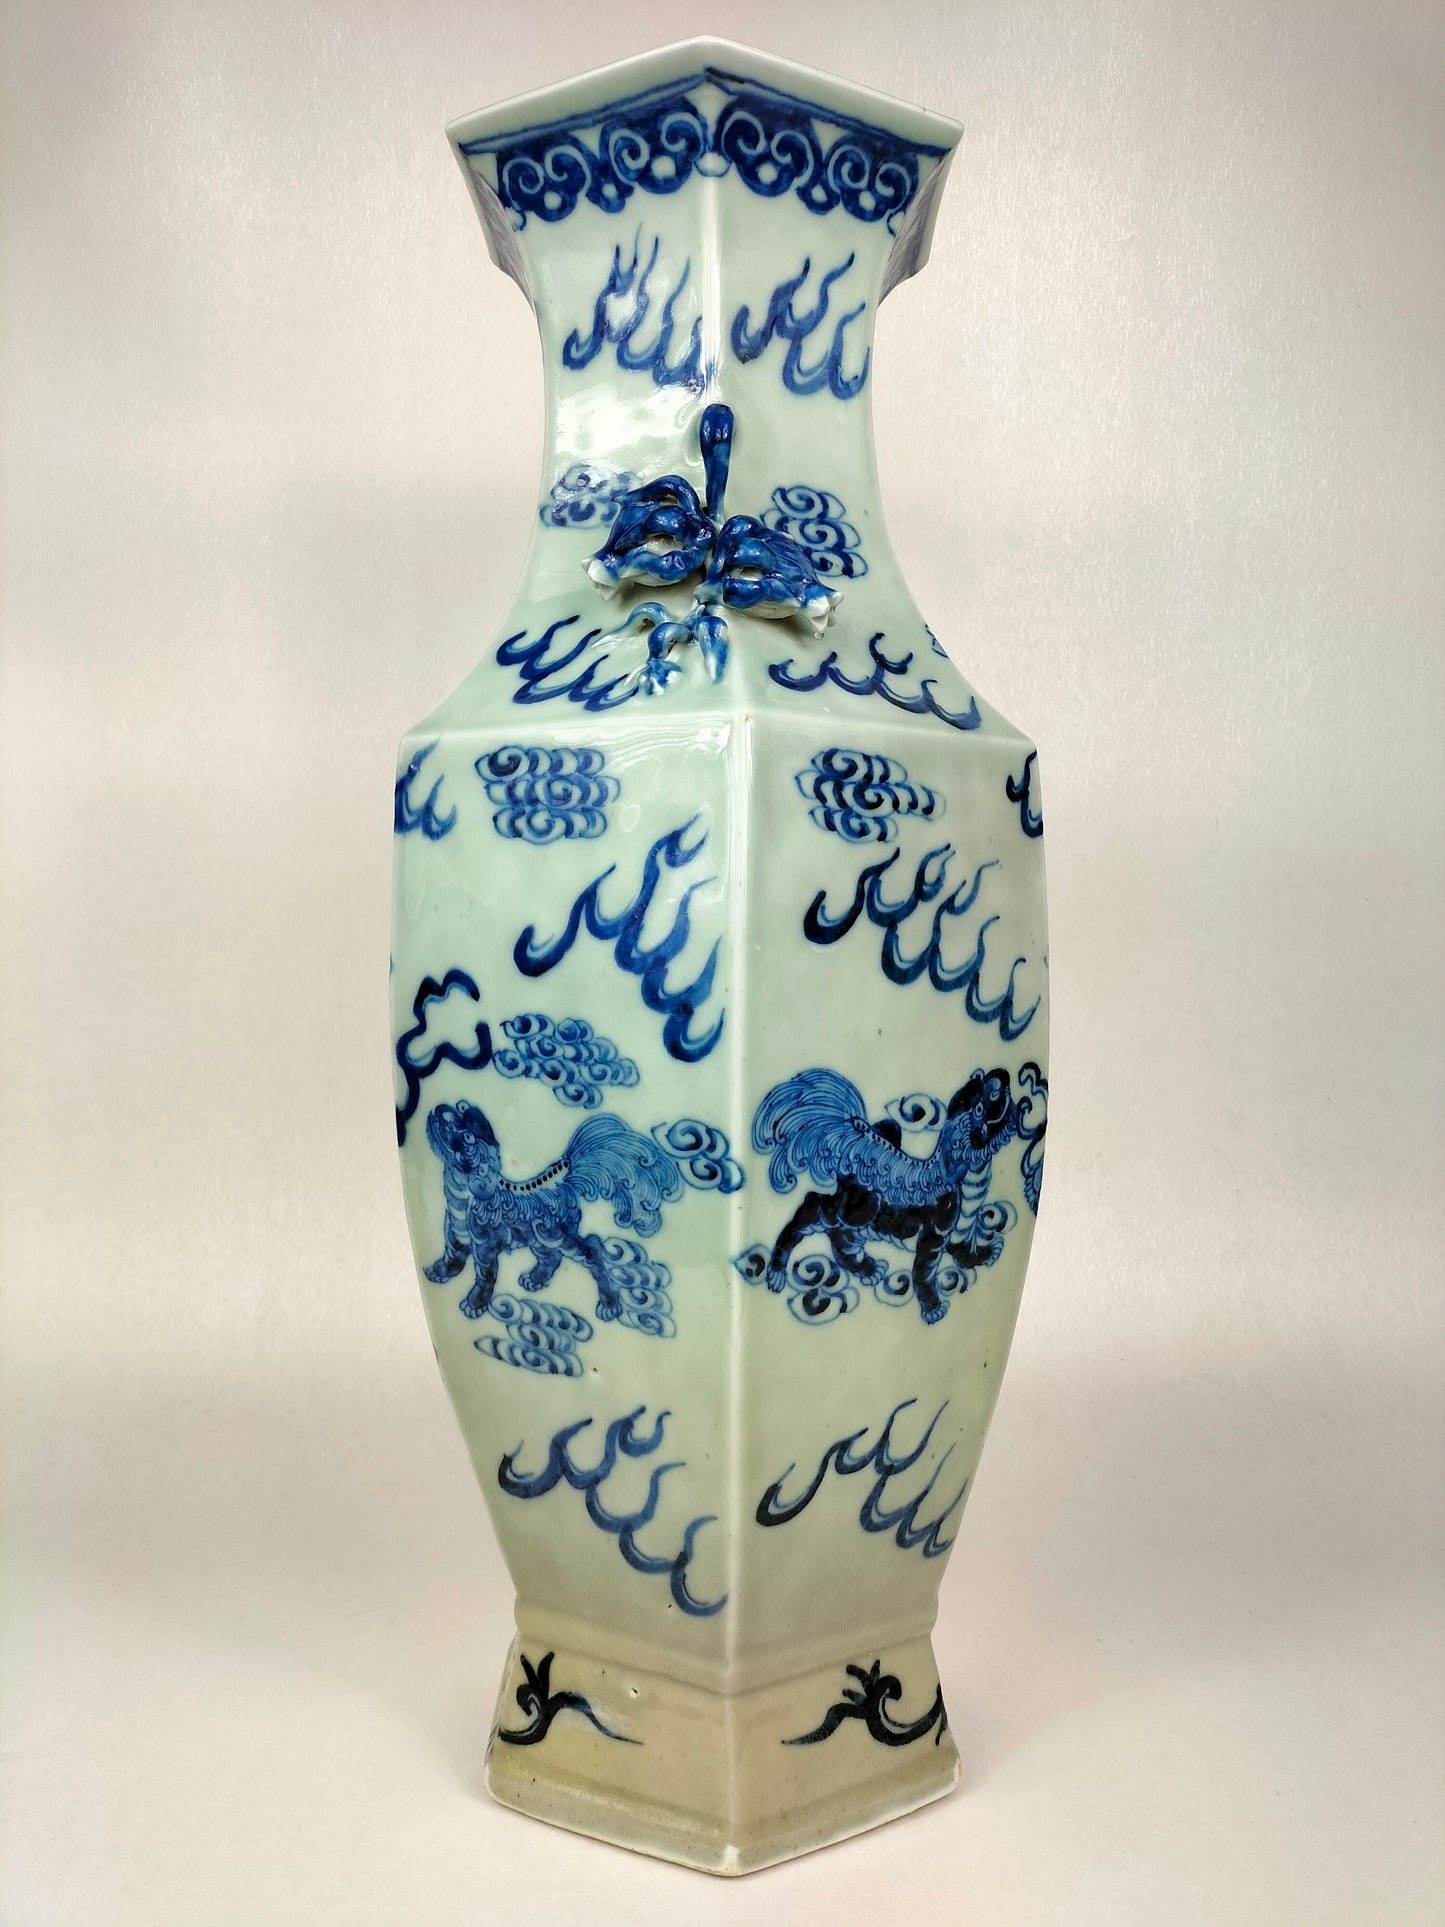 Grande vaso hexagonal chinês celadon foo dog // Dinastia Qing - meados do século XIX